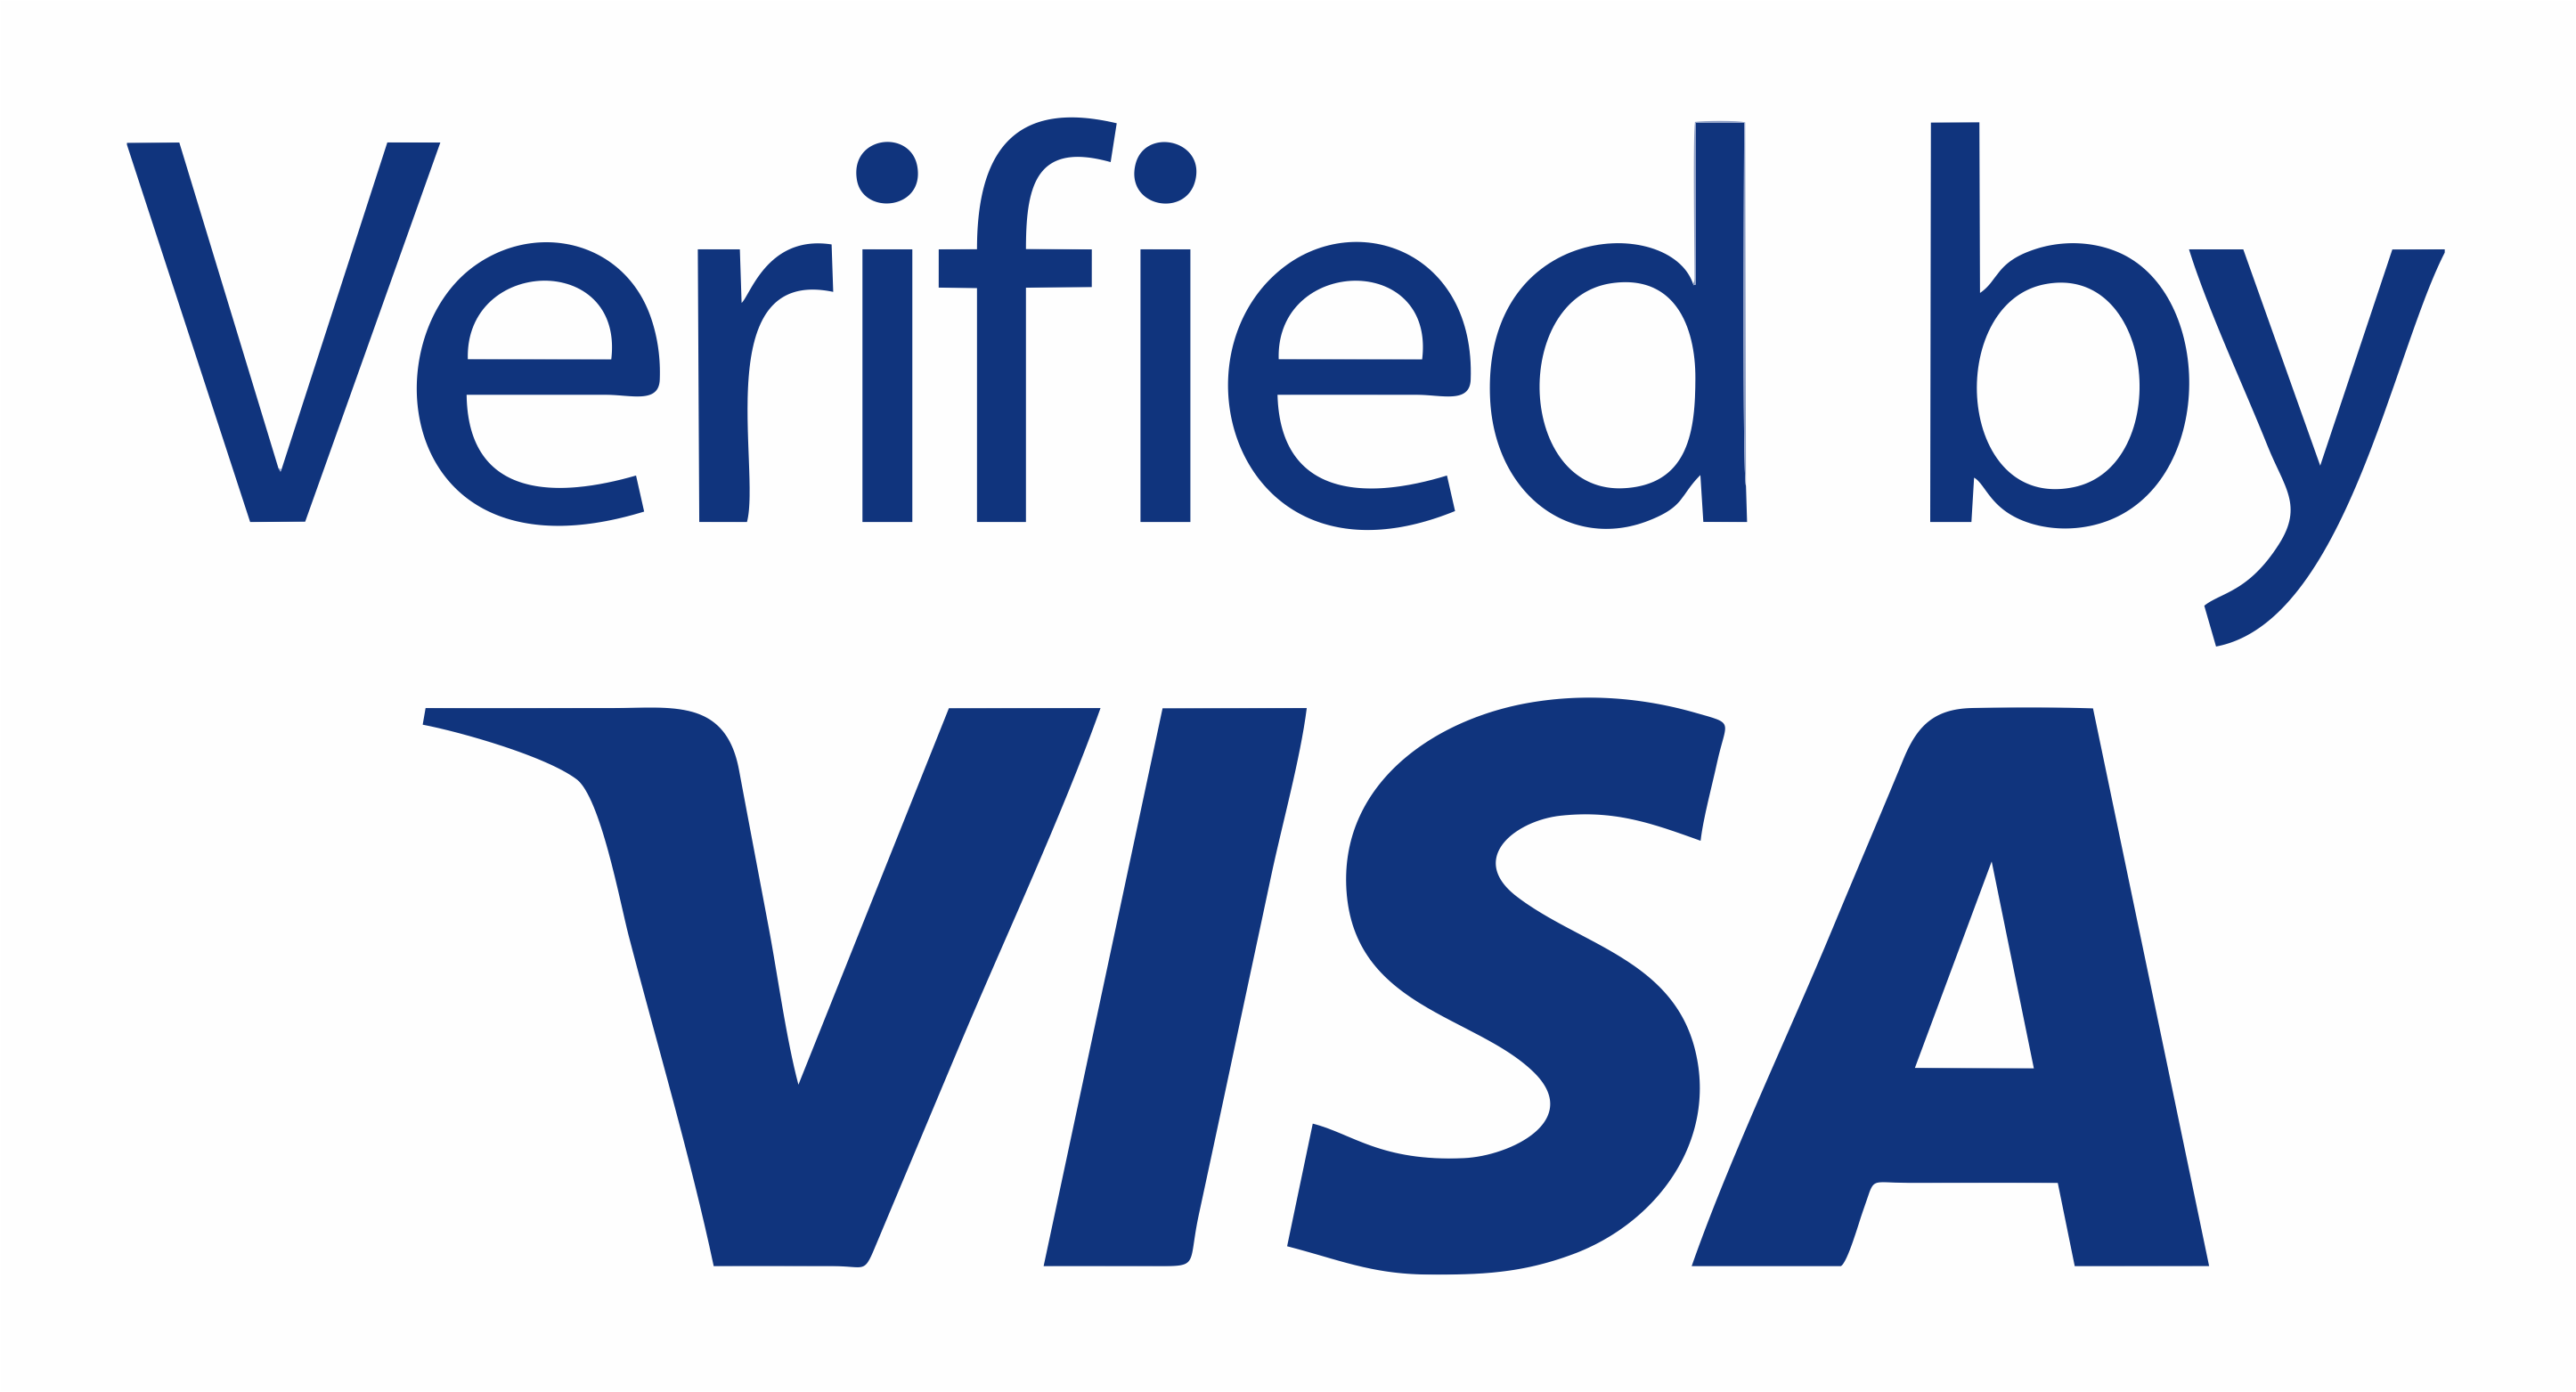 Verified by visa logo. Verified by visa svg. Verified by visa logo svg. Виза логотип без фона.